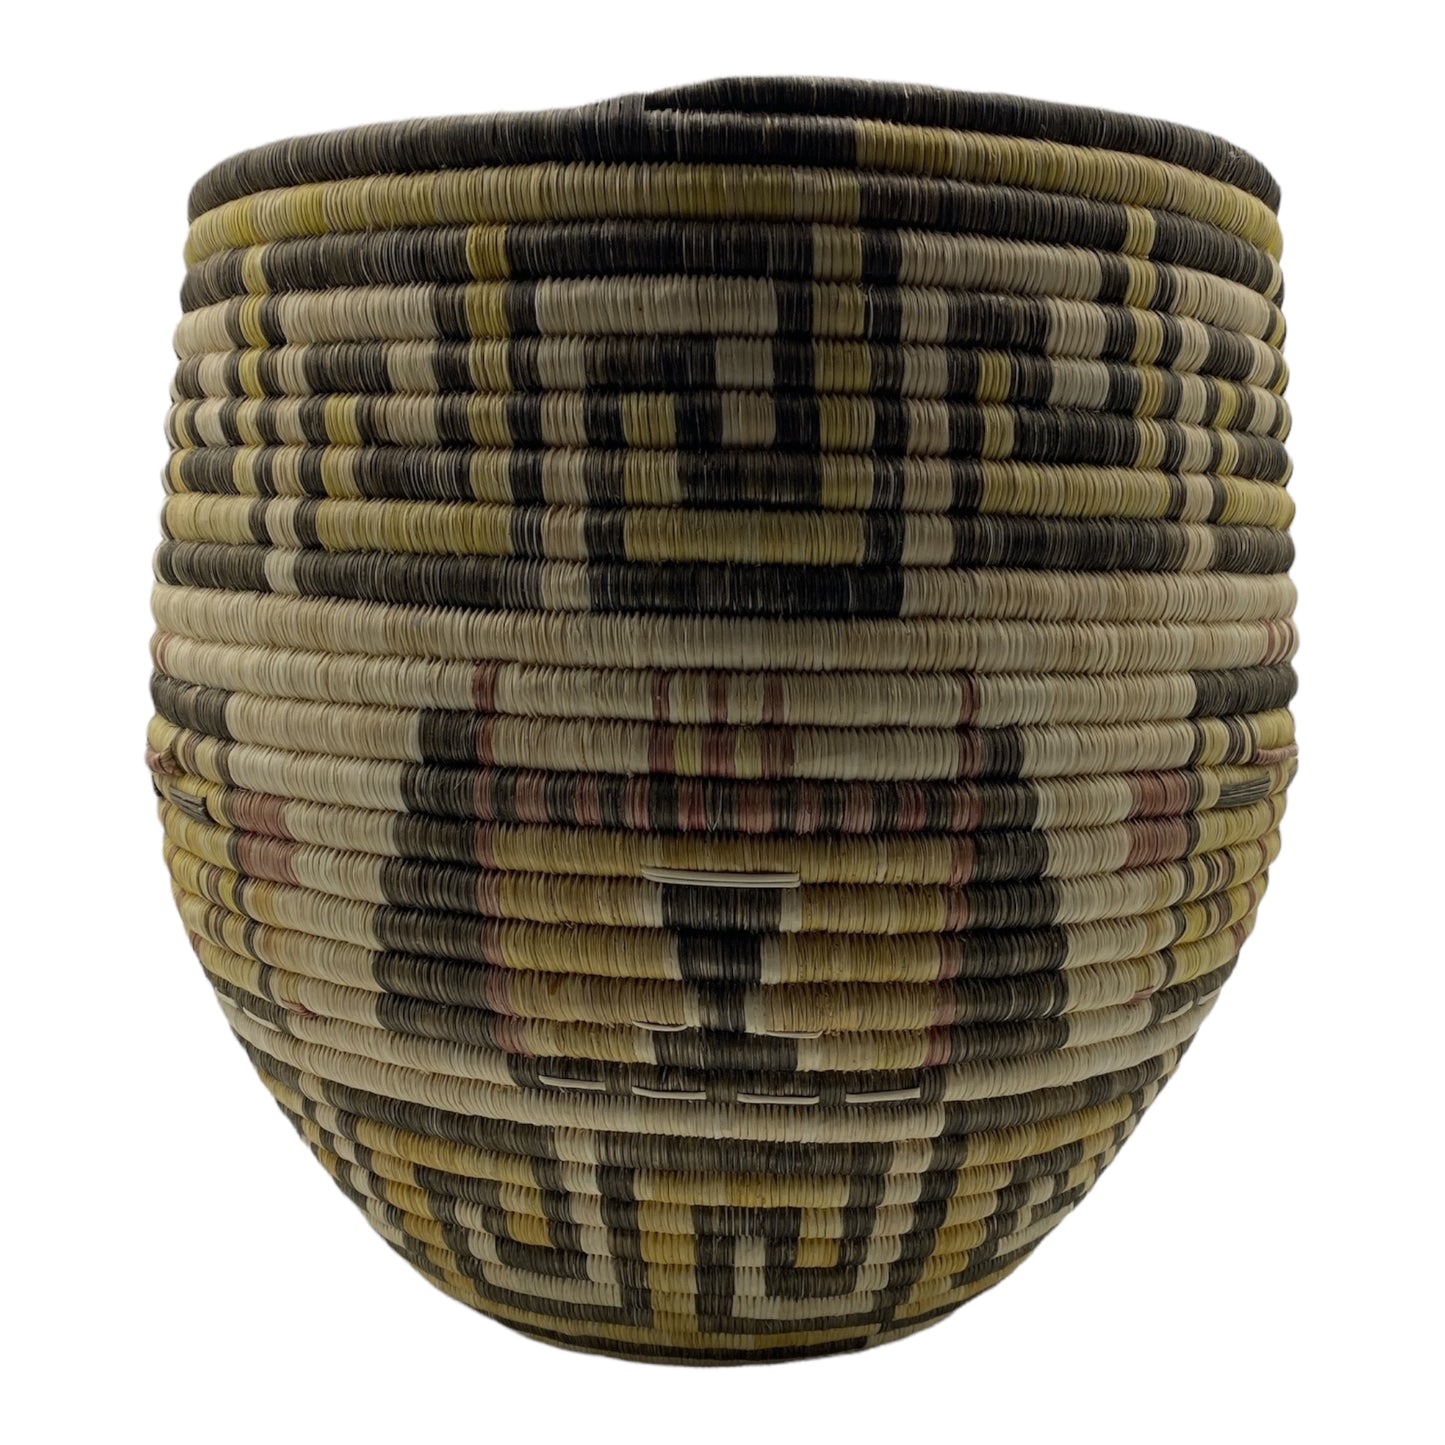 Large Coiled Hopi Basket 10.5" W x 11.25" H